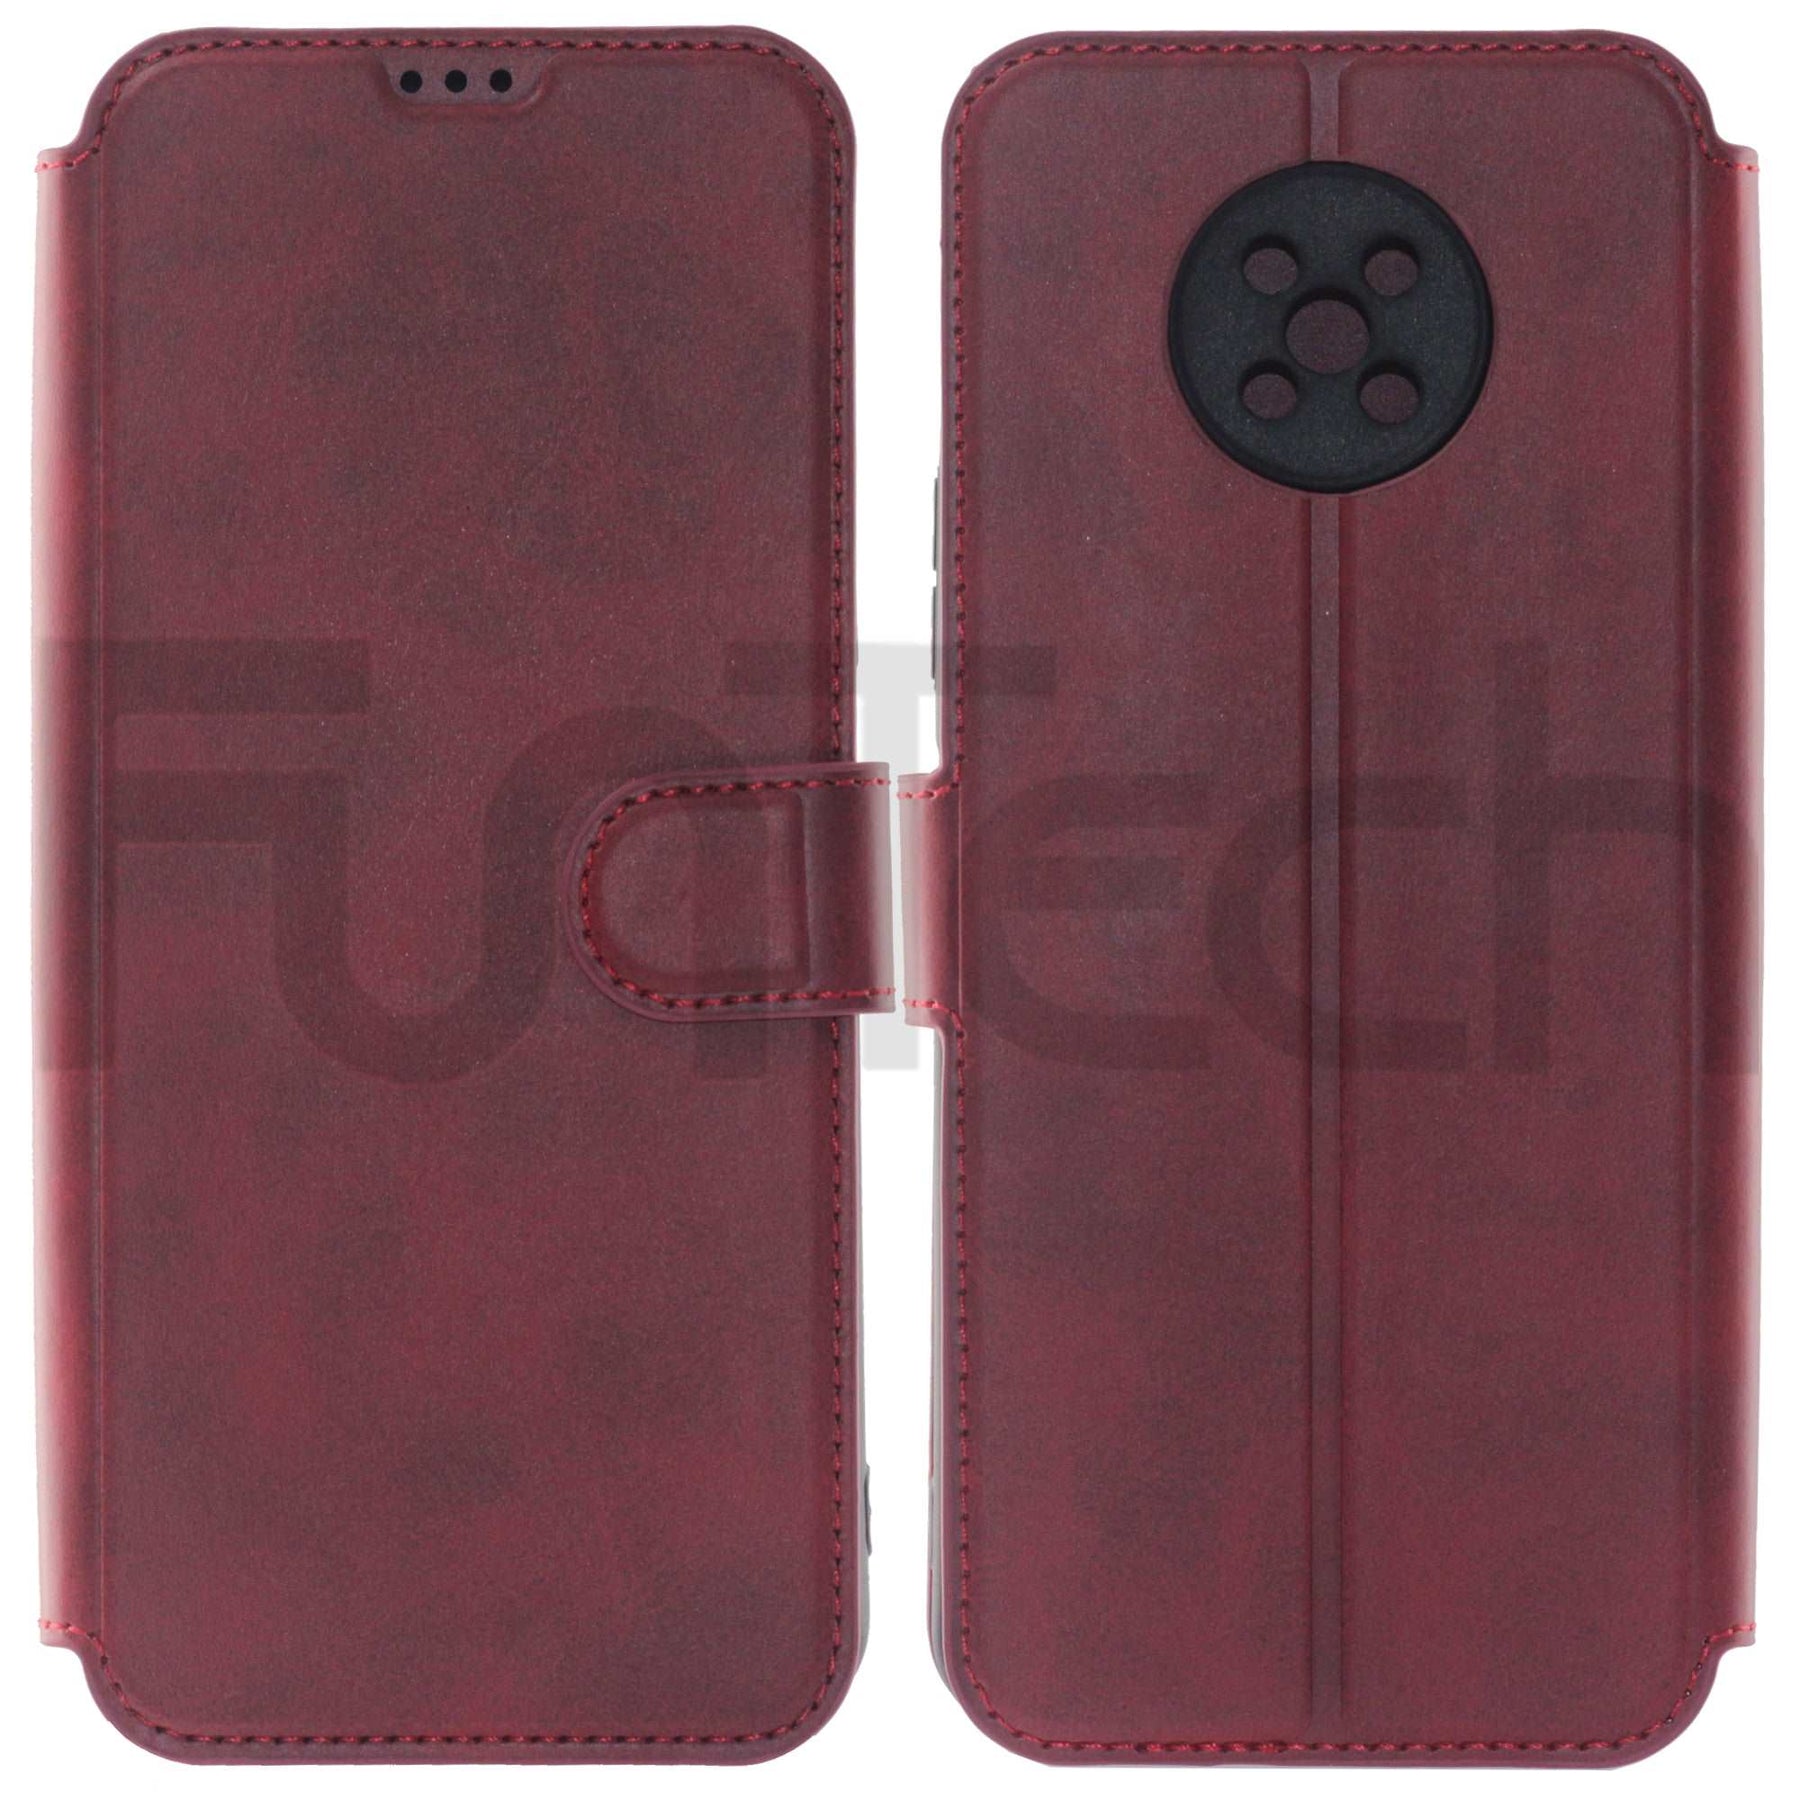 Nokia G50, Wallet Case, Color Red.